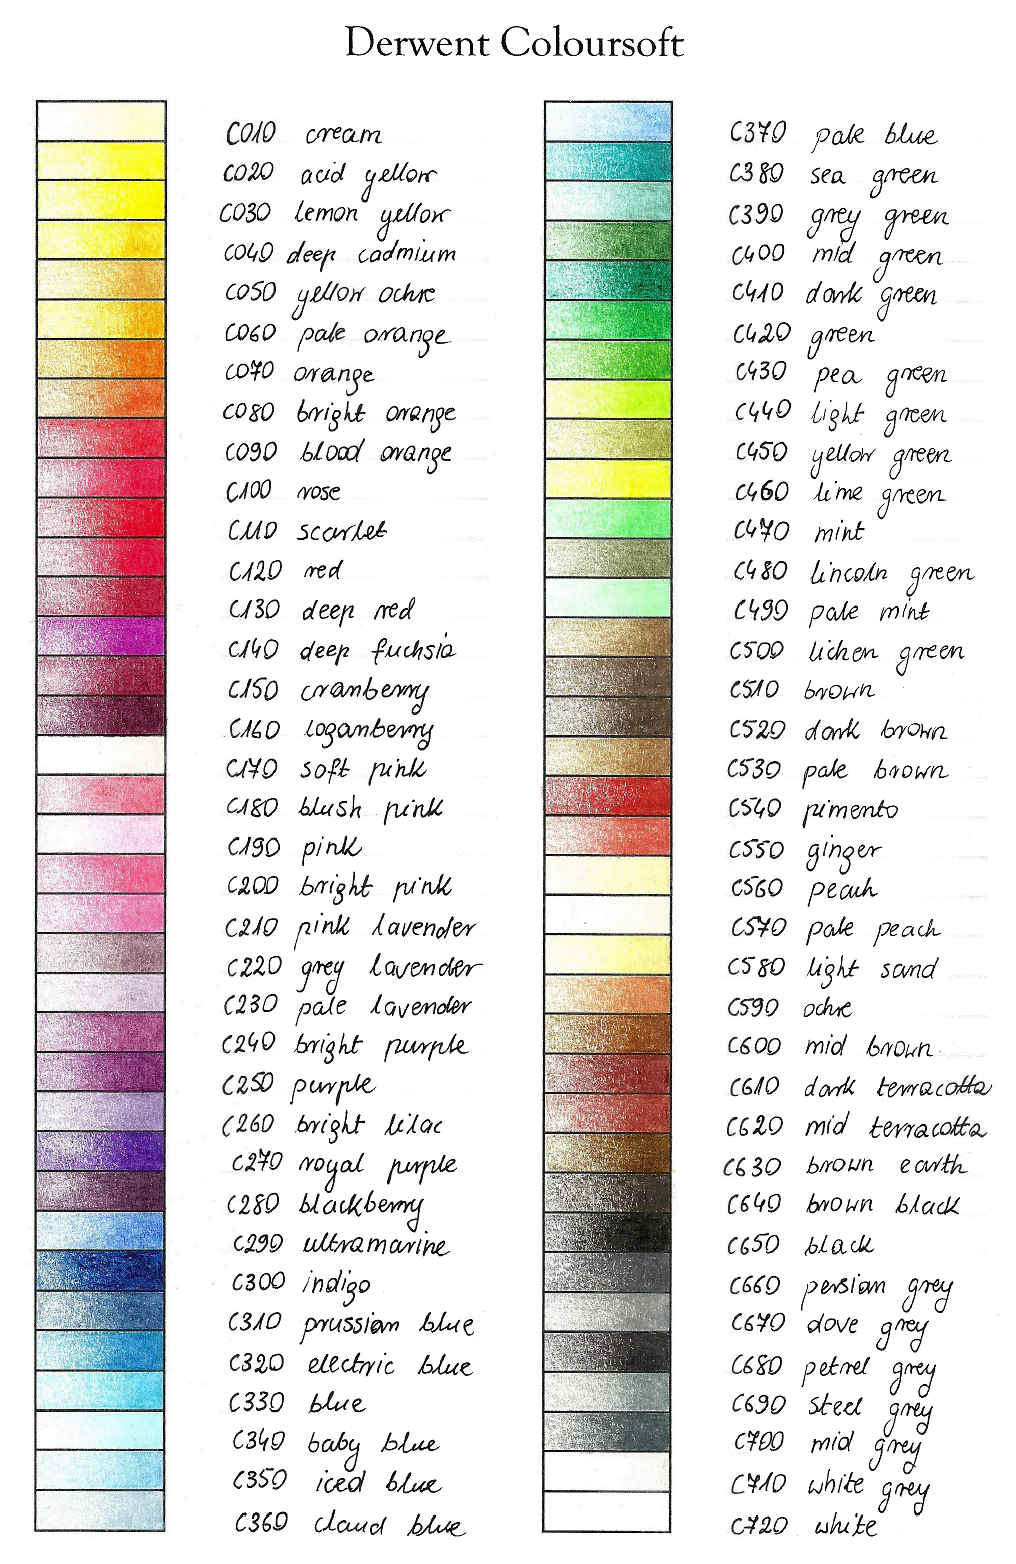 Derwent Coloursoft Conversion Chart To Polychromos